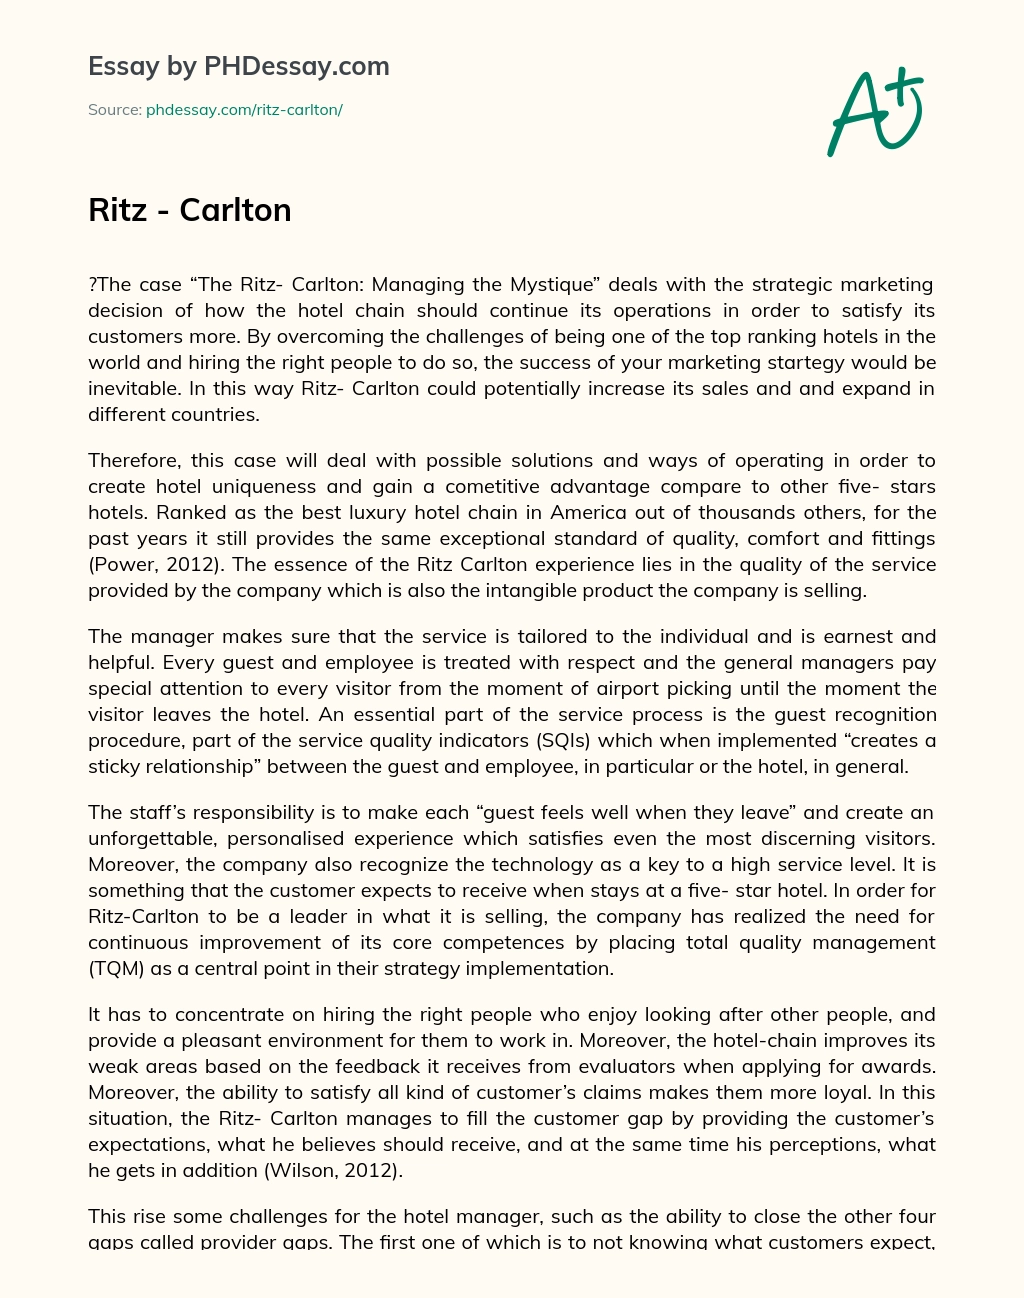 Ritz – Carlton essay